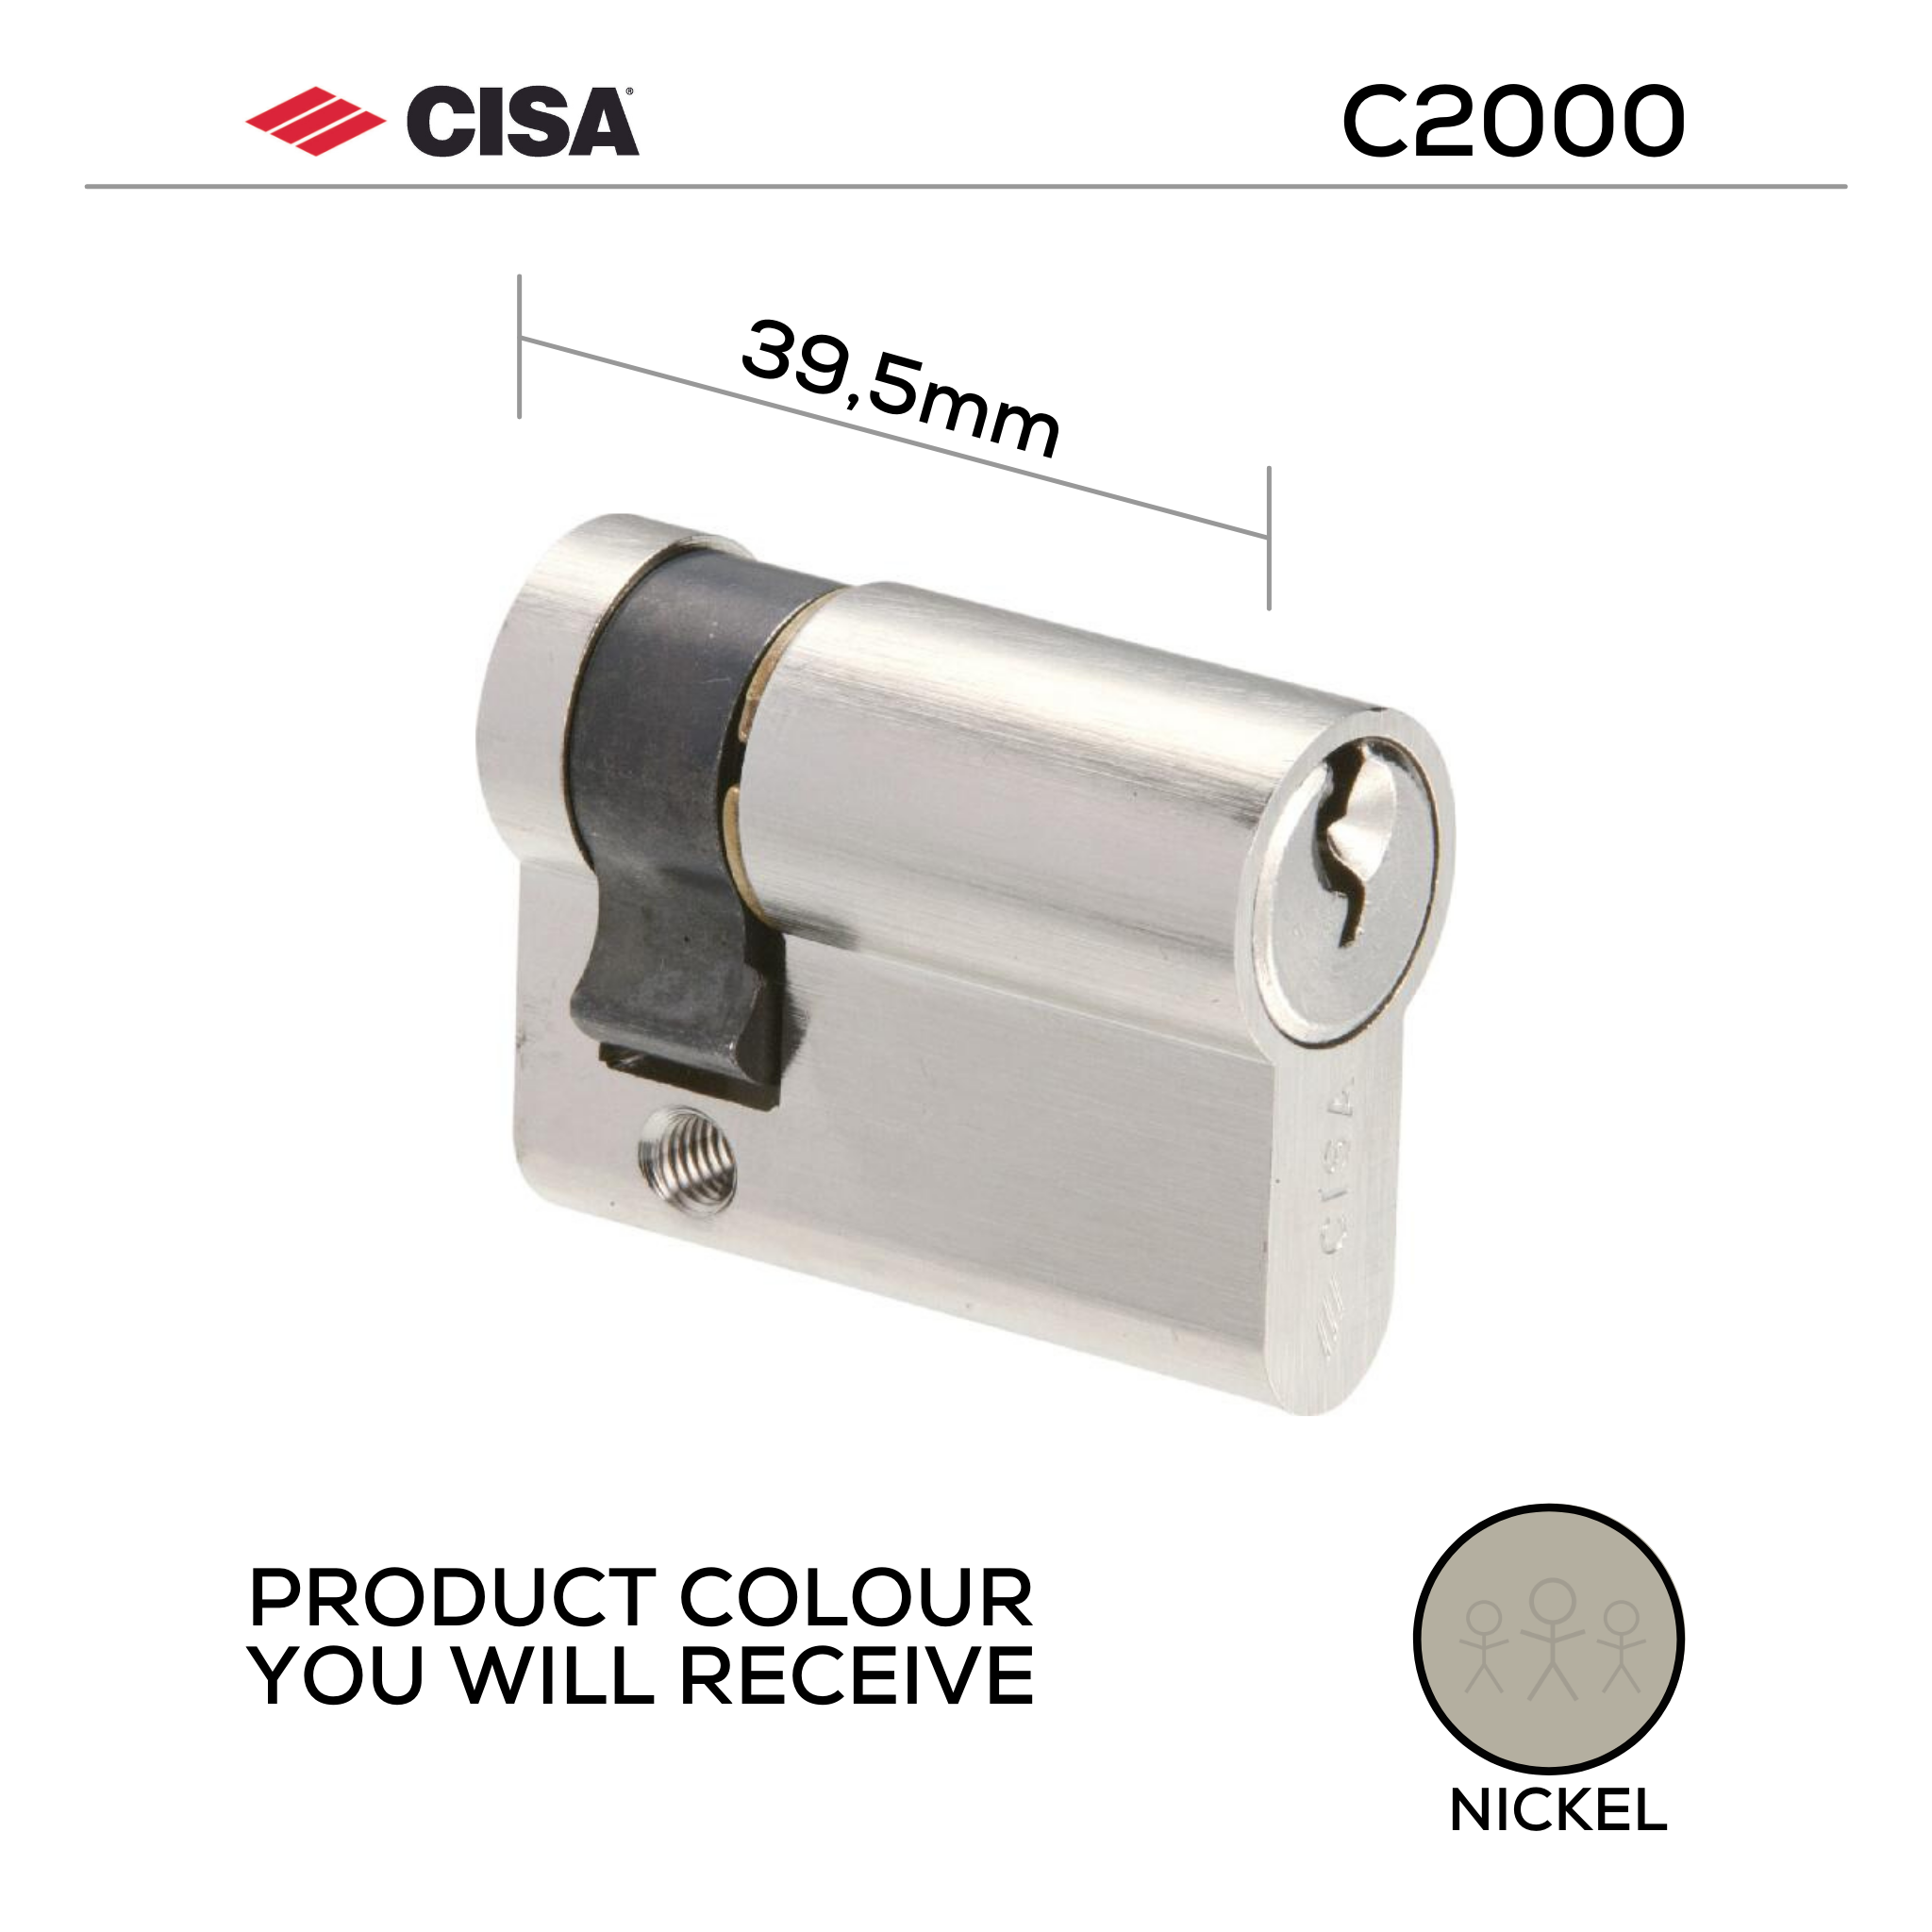 0G304-02-12-KD, 39,5mm - 29.5/10, Half (Single Cylinder), C2000, Key, Keyed to Differ (Standard), 3 Keys, 5 Pin, Nickel, CISA